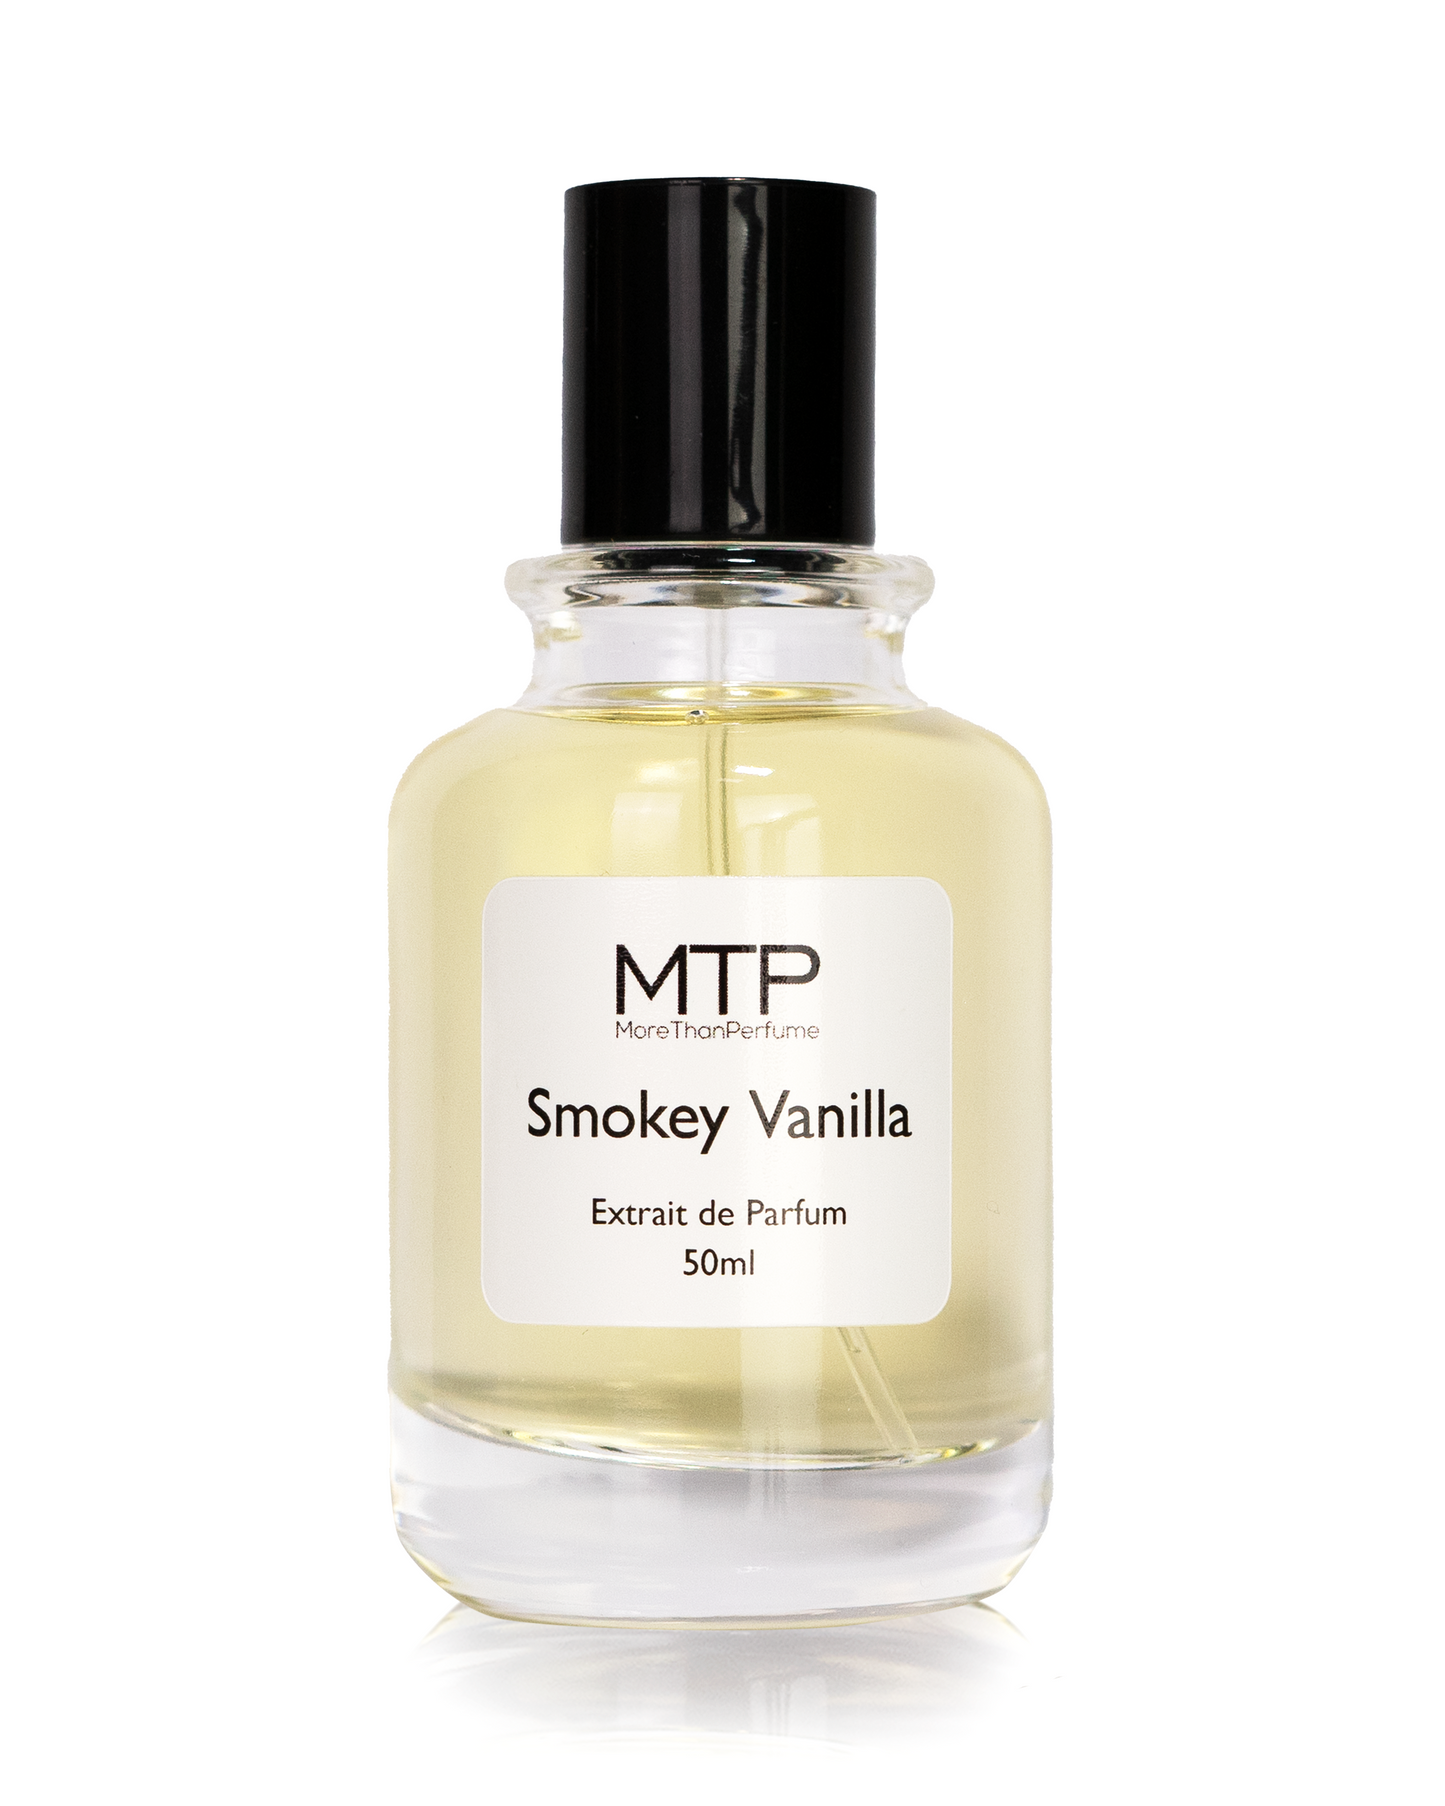 Smokey Vanilla